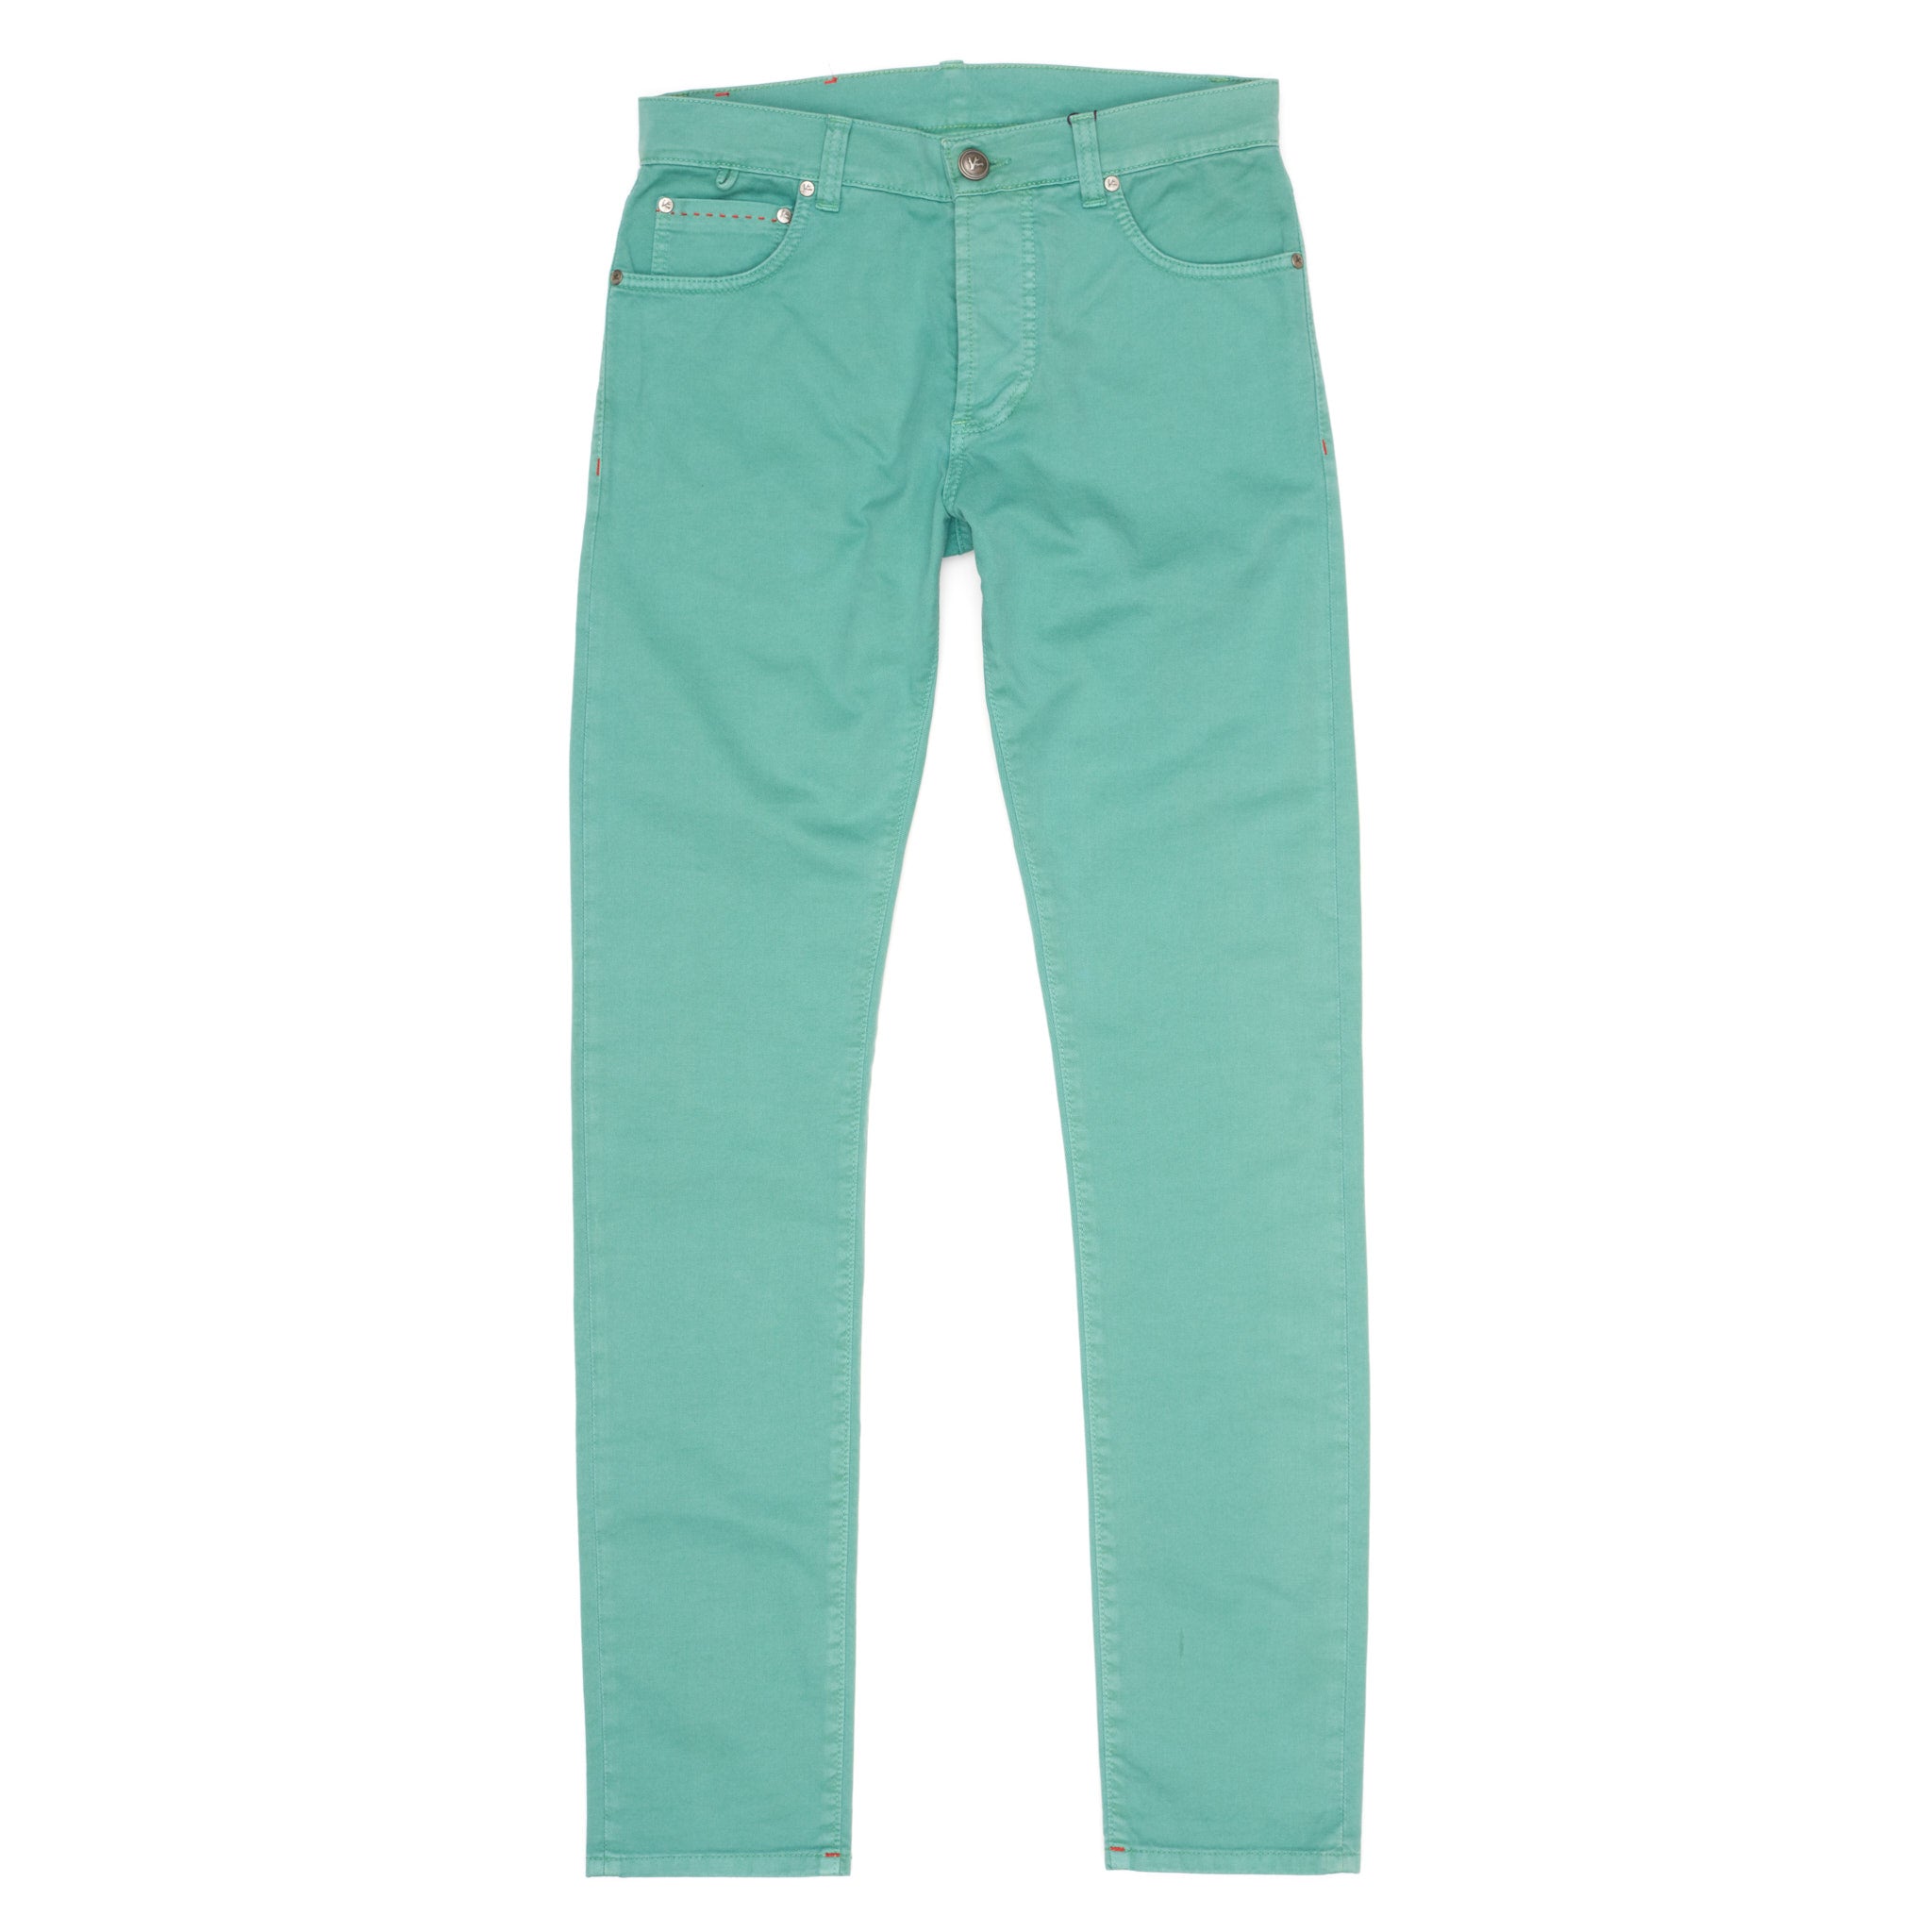 ISAIA Napoli Light Green Stretch Denim Slim Fit Jeans Pants EU 46 NEW US 30 ISAIA